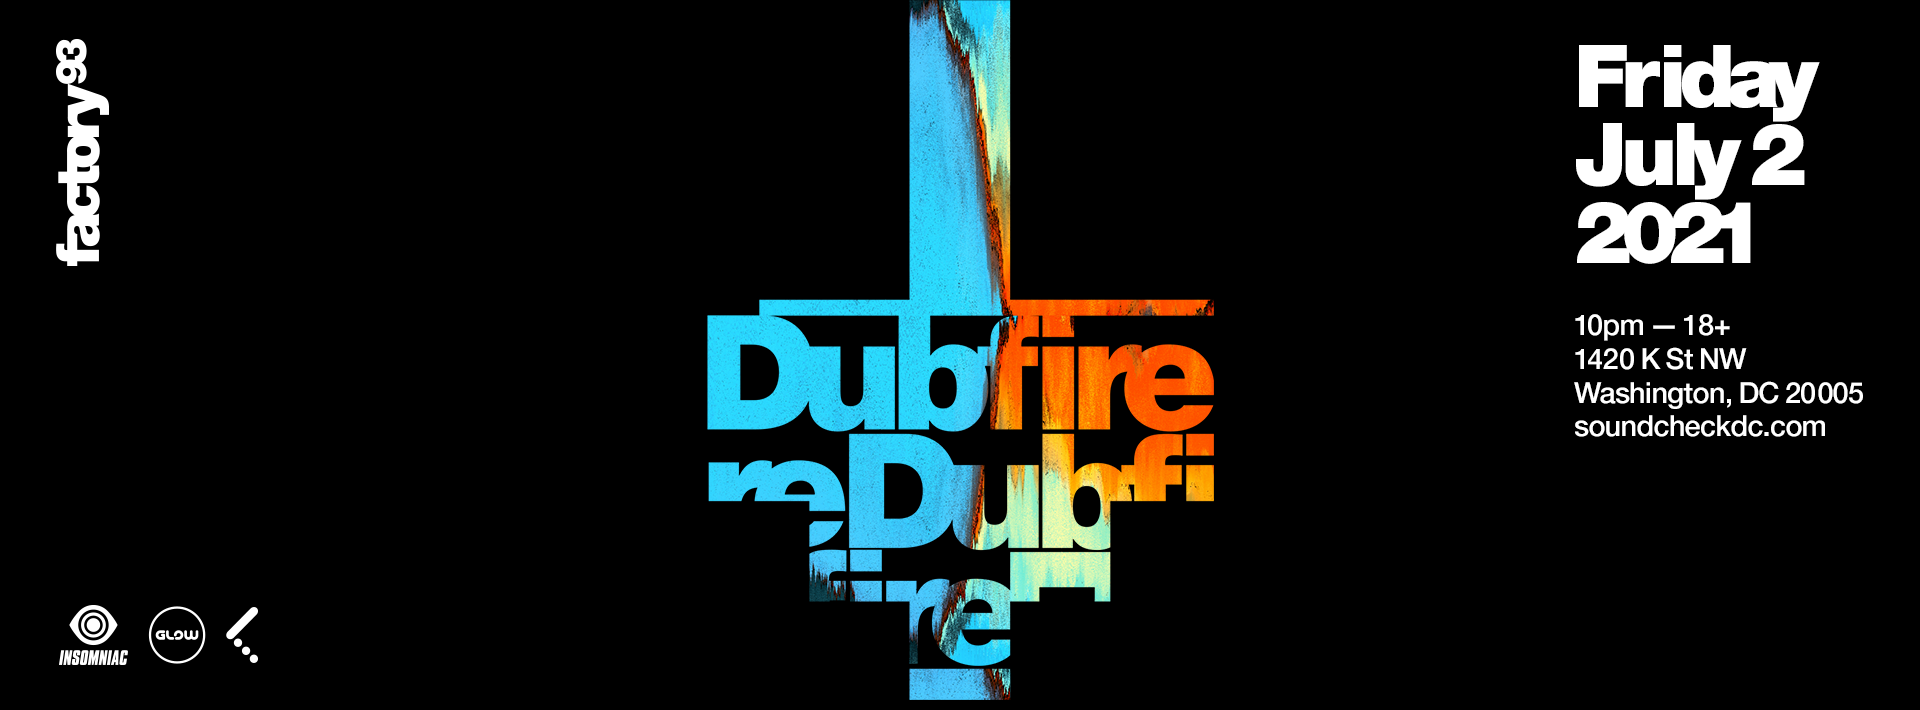 Dubfire